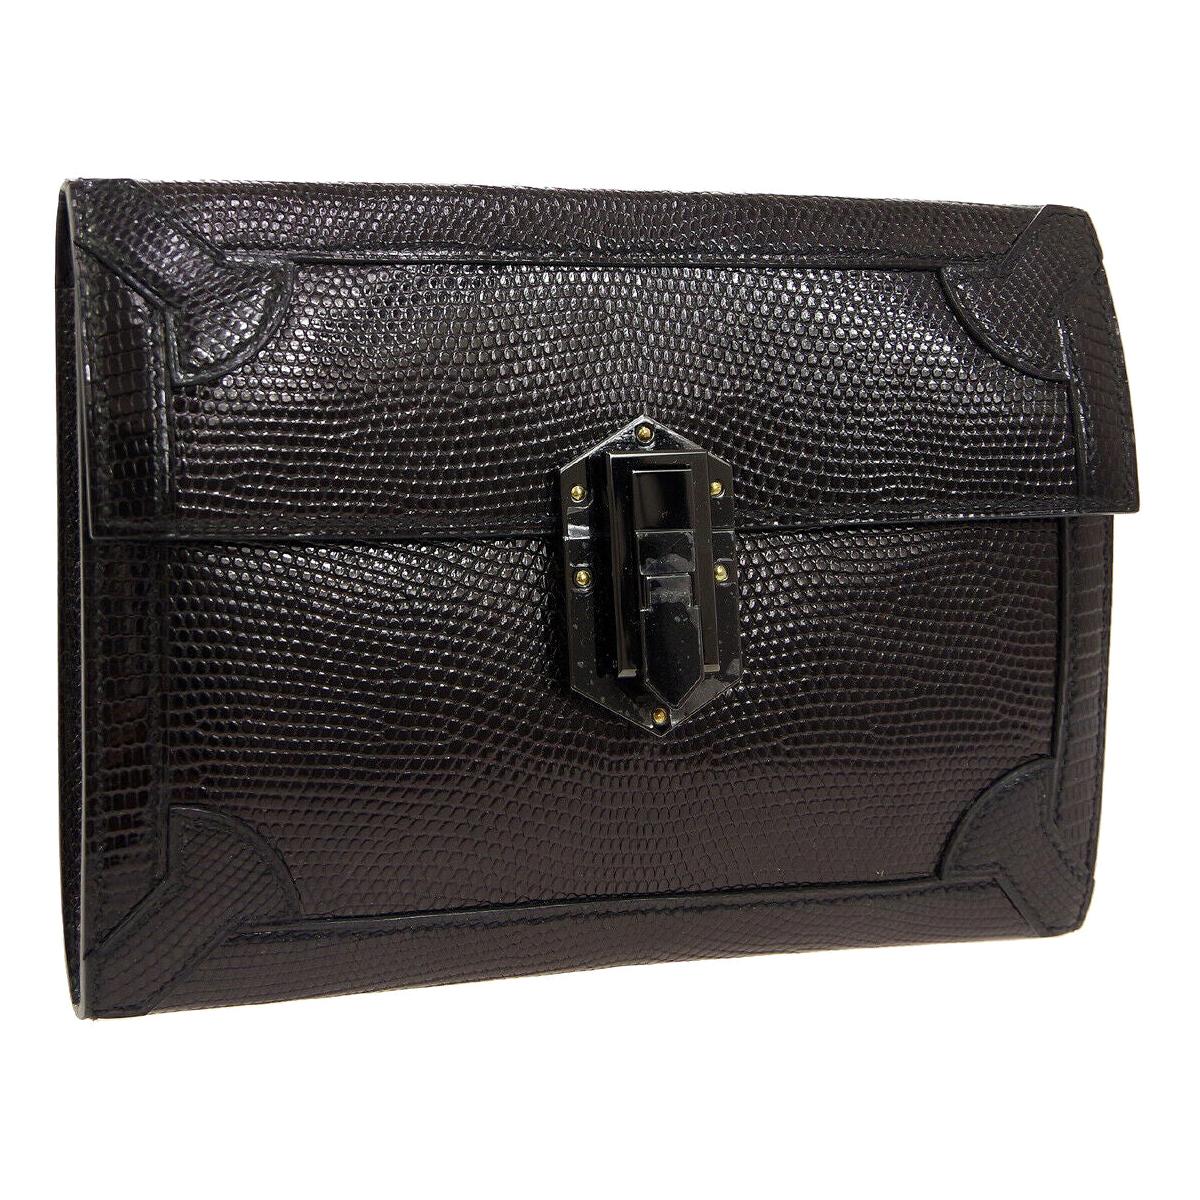 Hermes Black Lizard Exotic Leather Envelope Evening Clutch Bag in Box